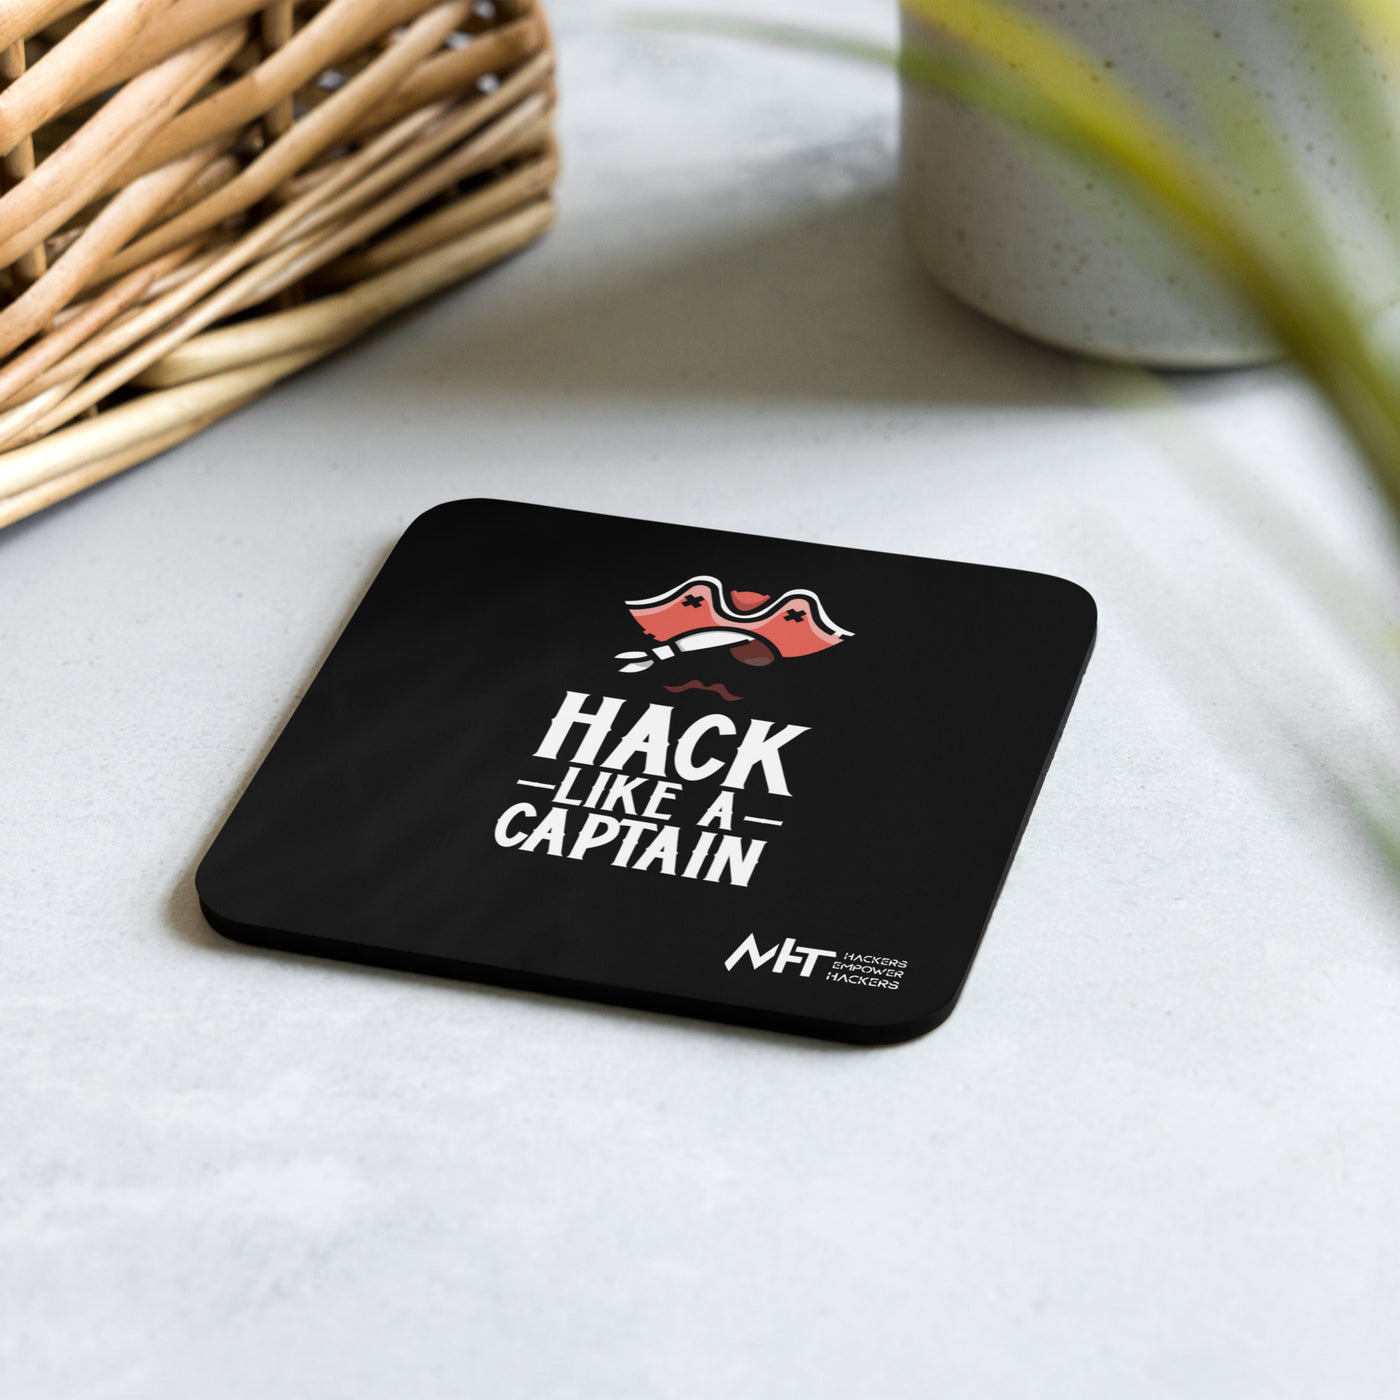 Hack like a captain - Cork-back coaster